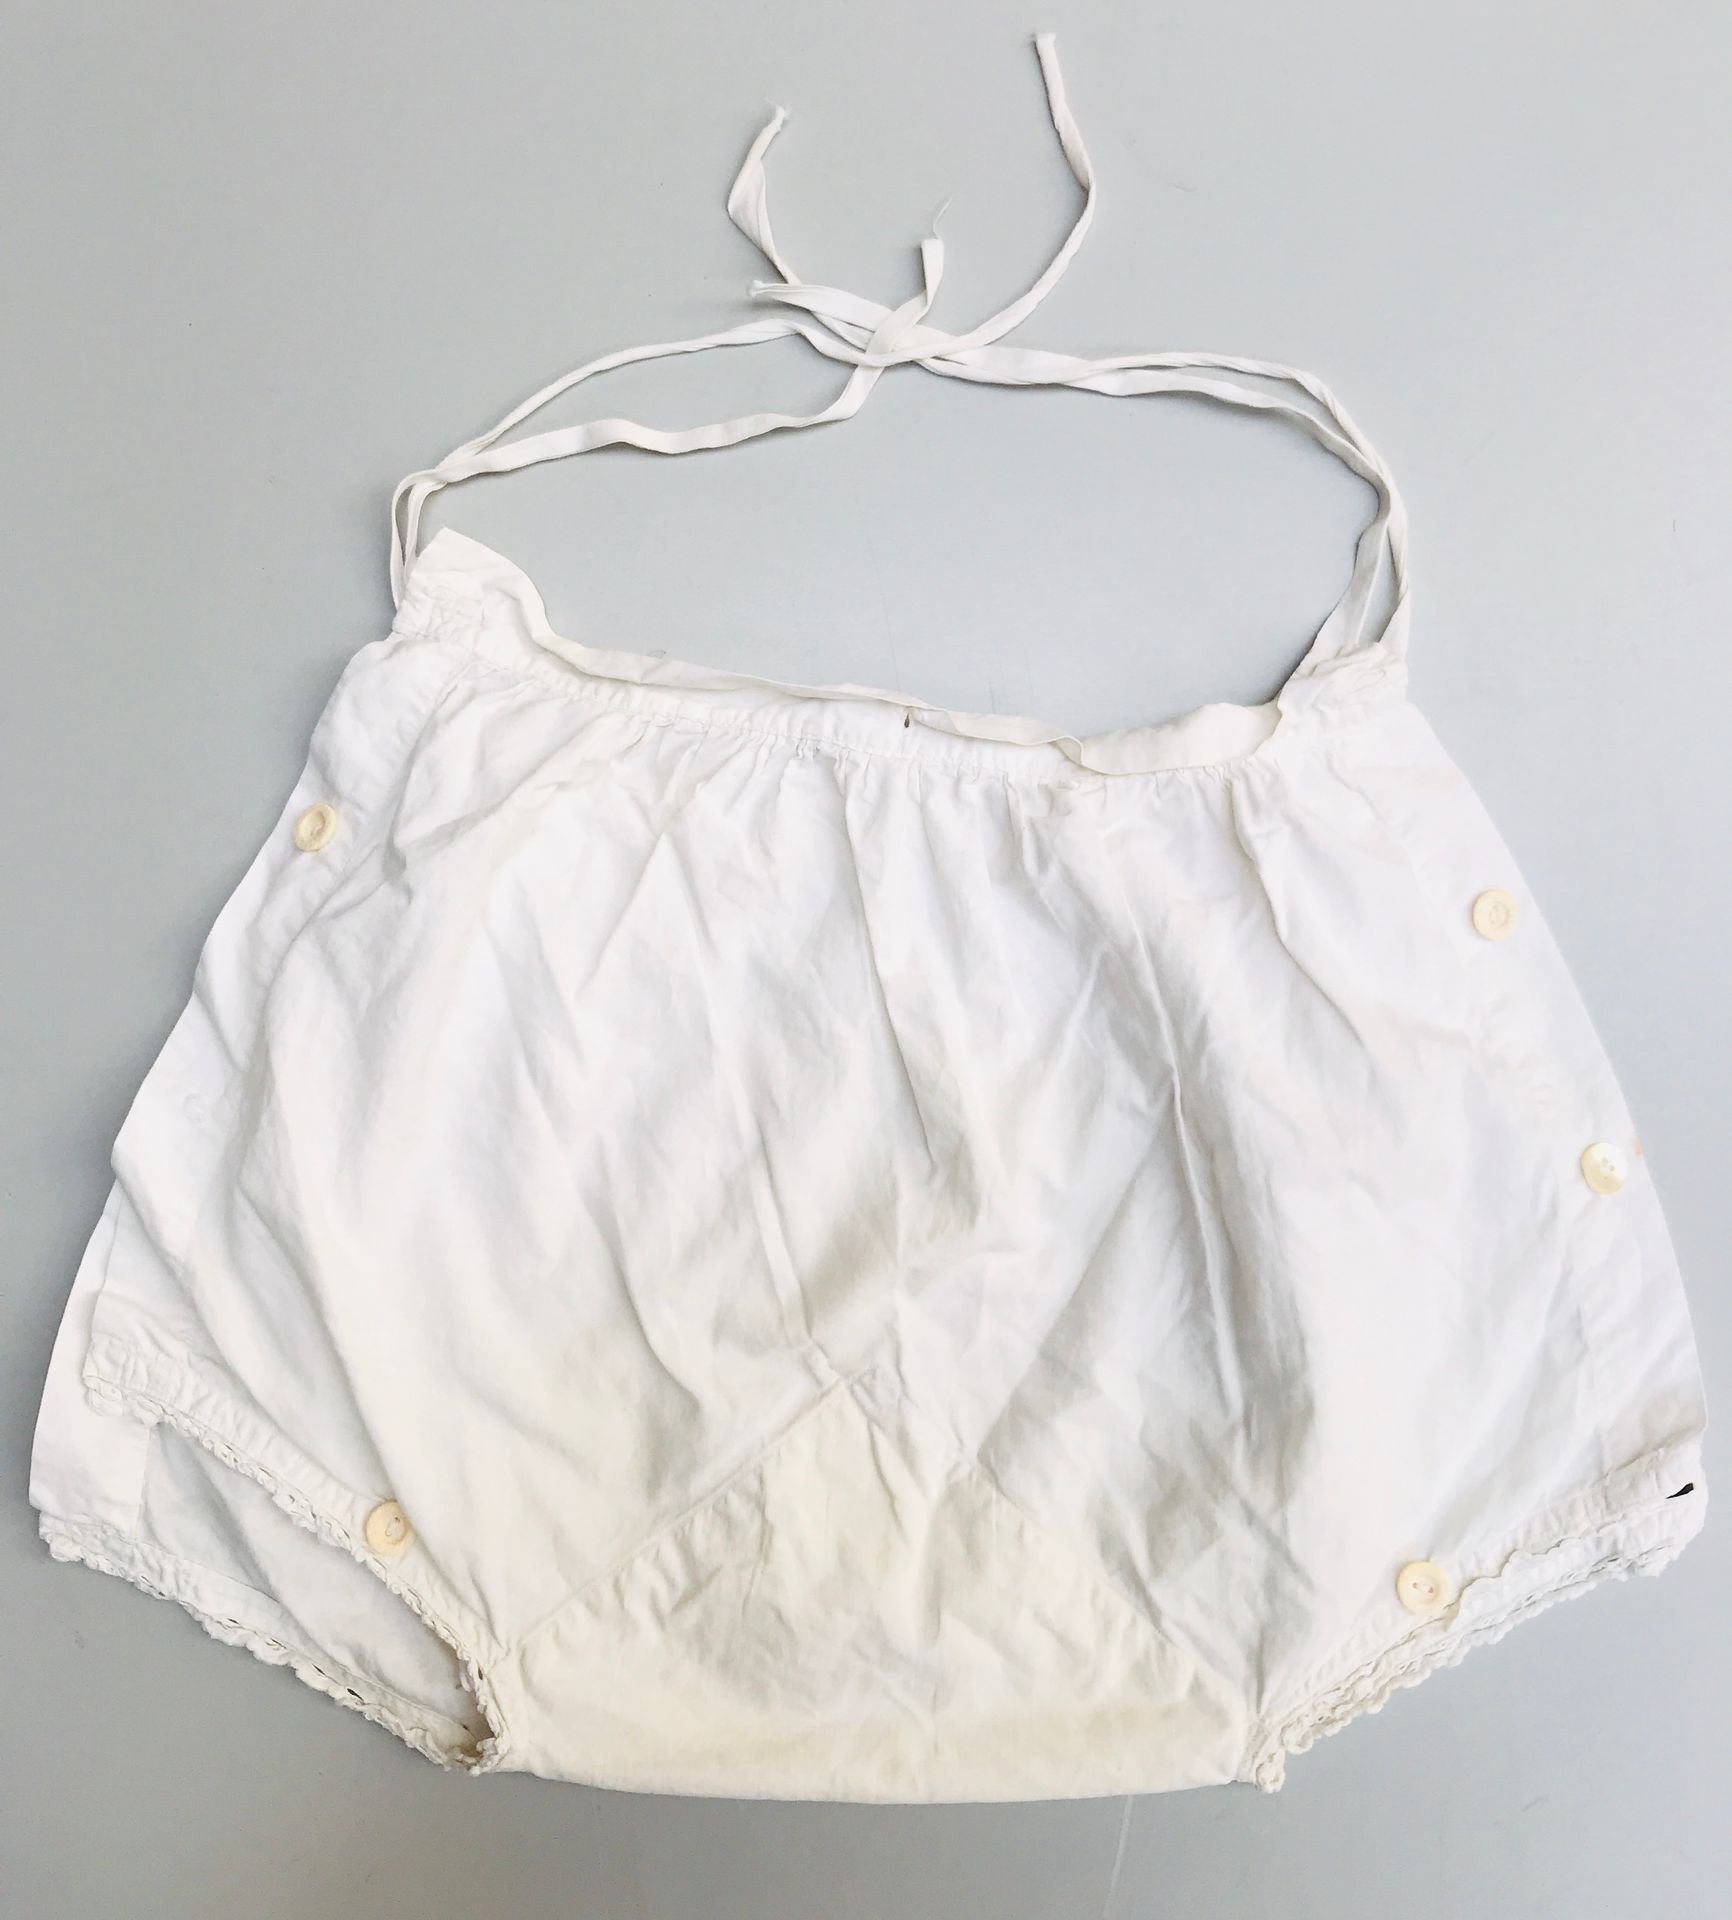 Quatre culottes d'enfant 
白色棉布，有纽扣标签和织物领带，有些是有图案的

磨损和污渍